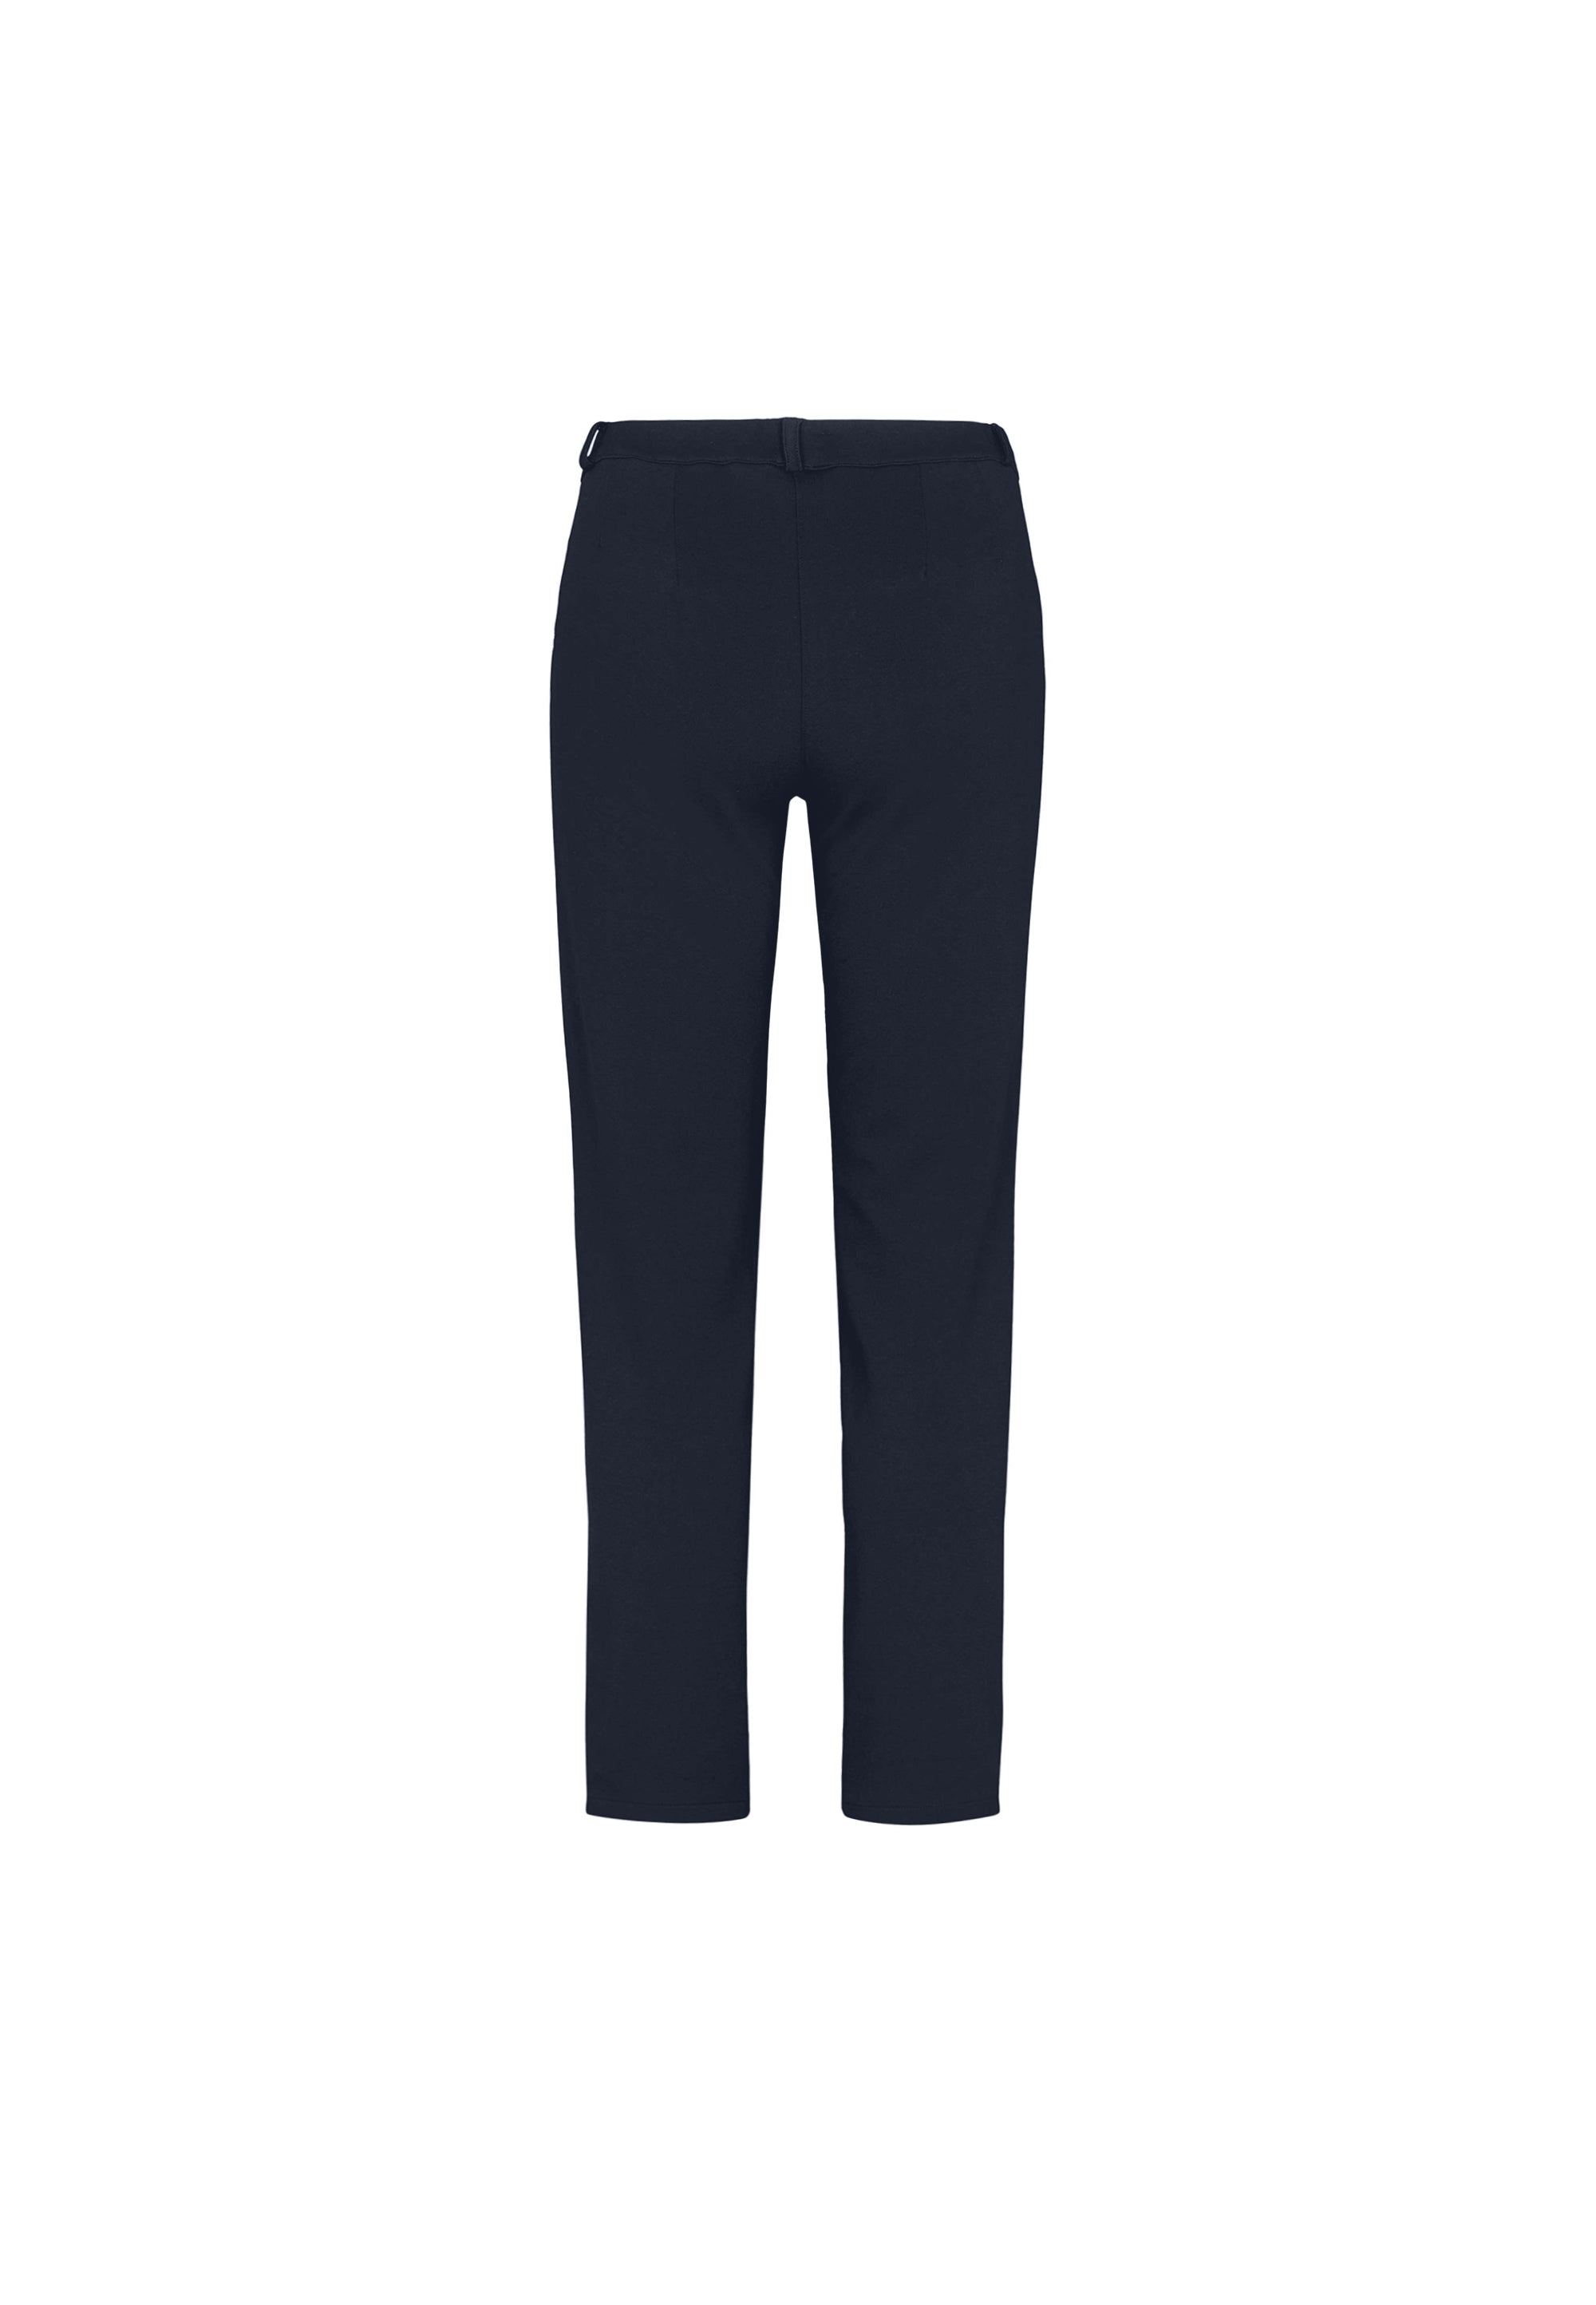 LAURIE Rylie Regular - Medium Length Trousers REGULAR 49103 Navy brushed